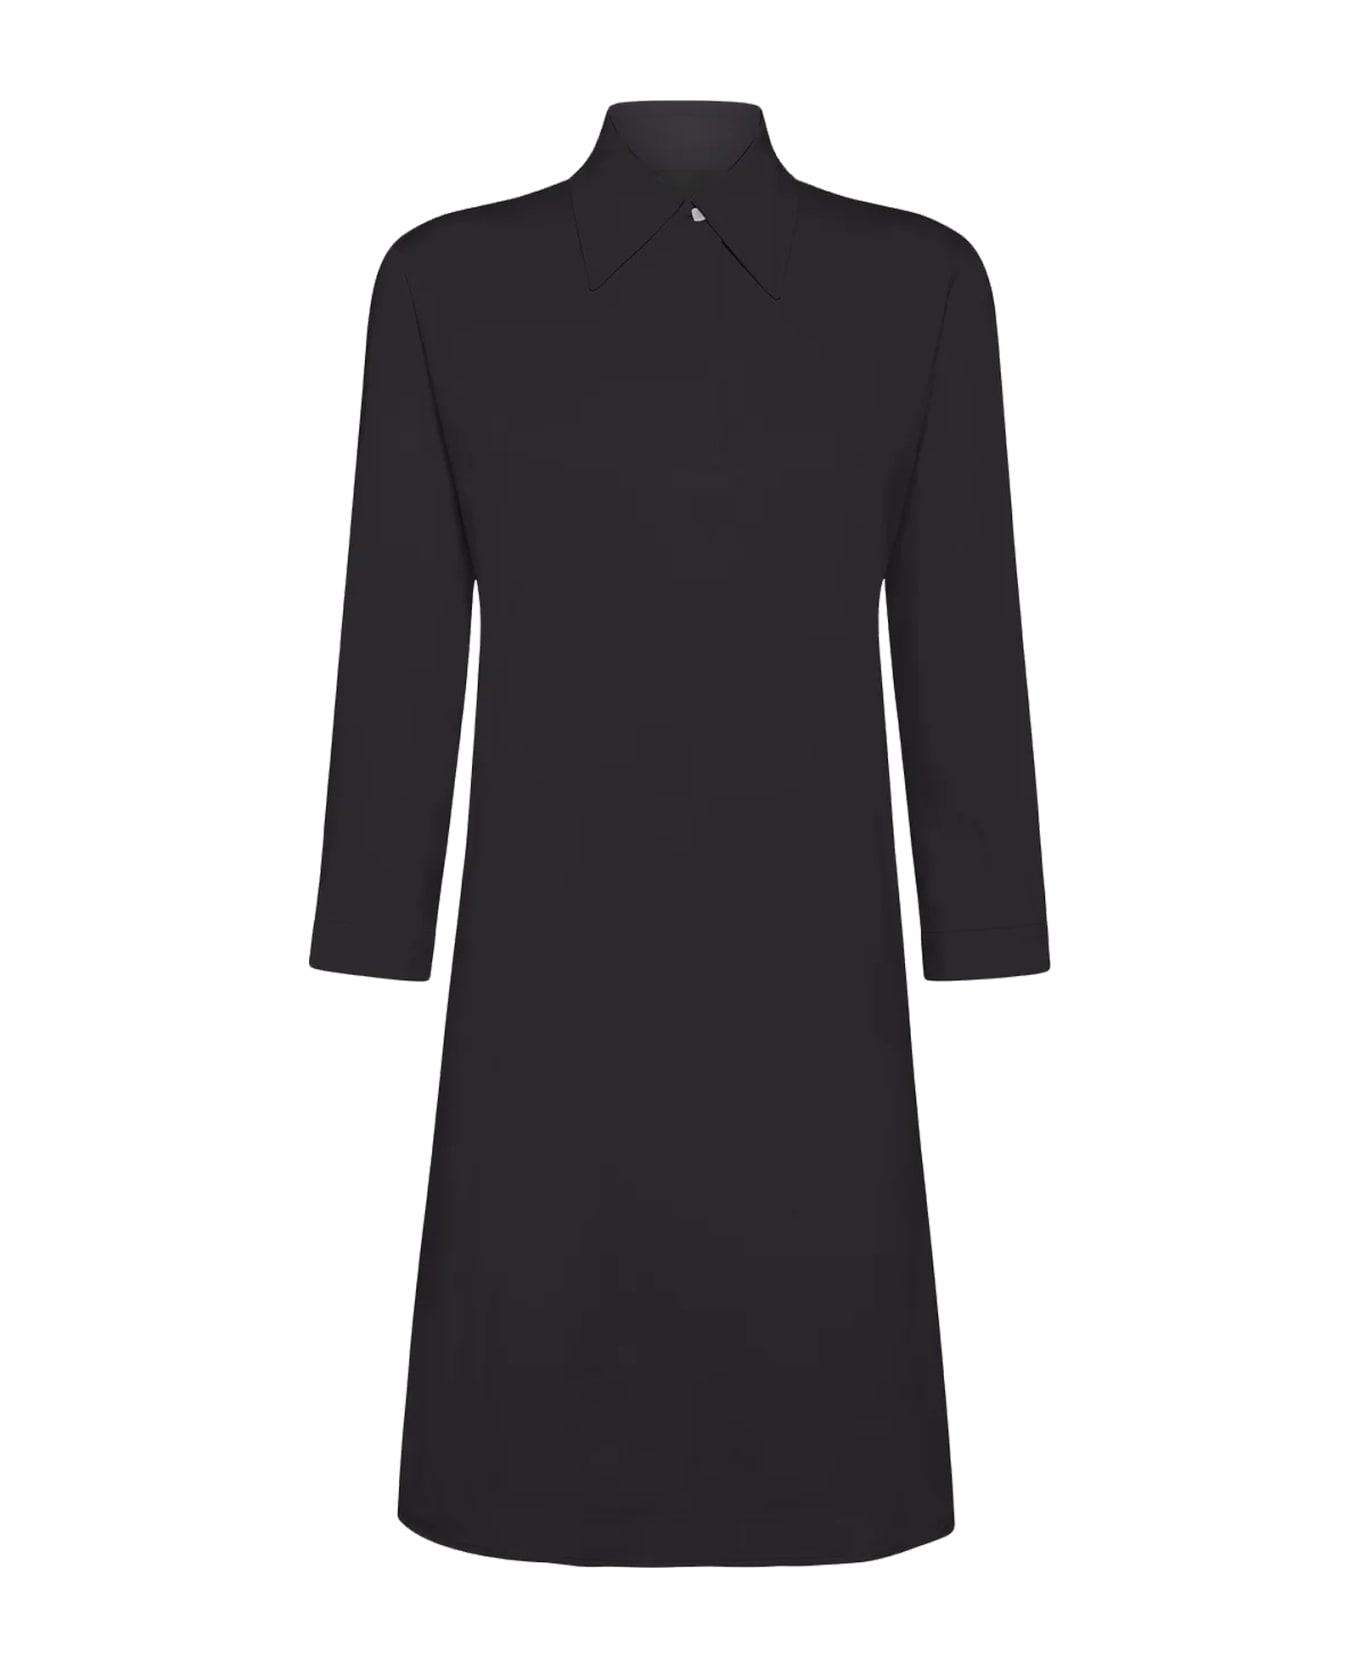 RRD - Roberto Ricci Design Dress - Black